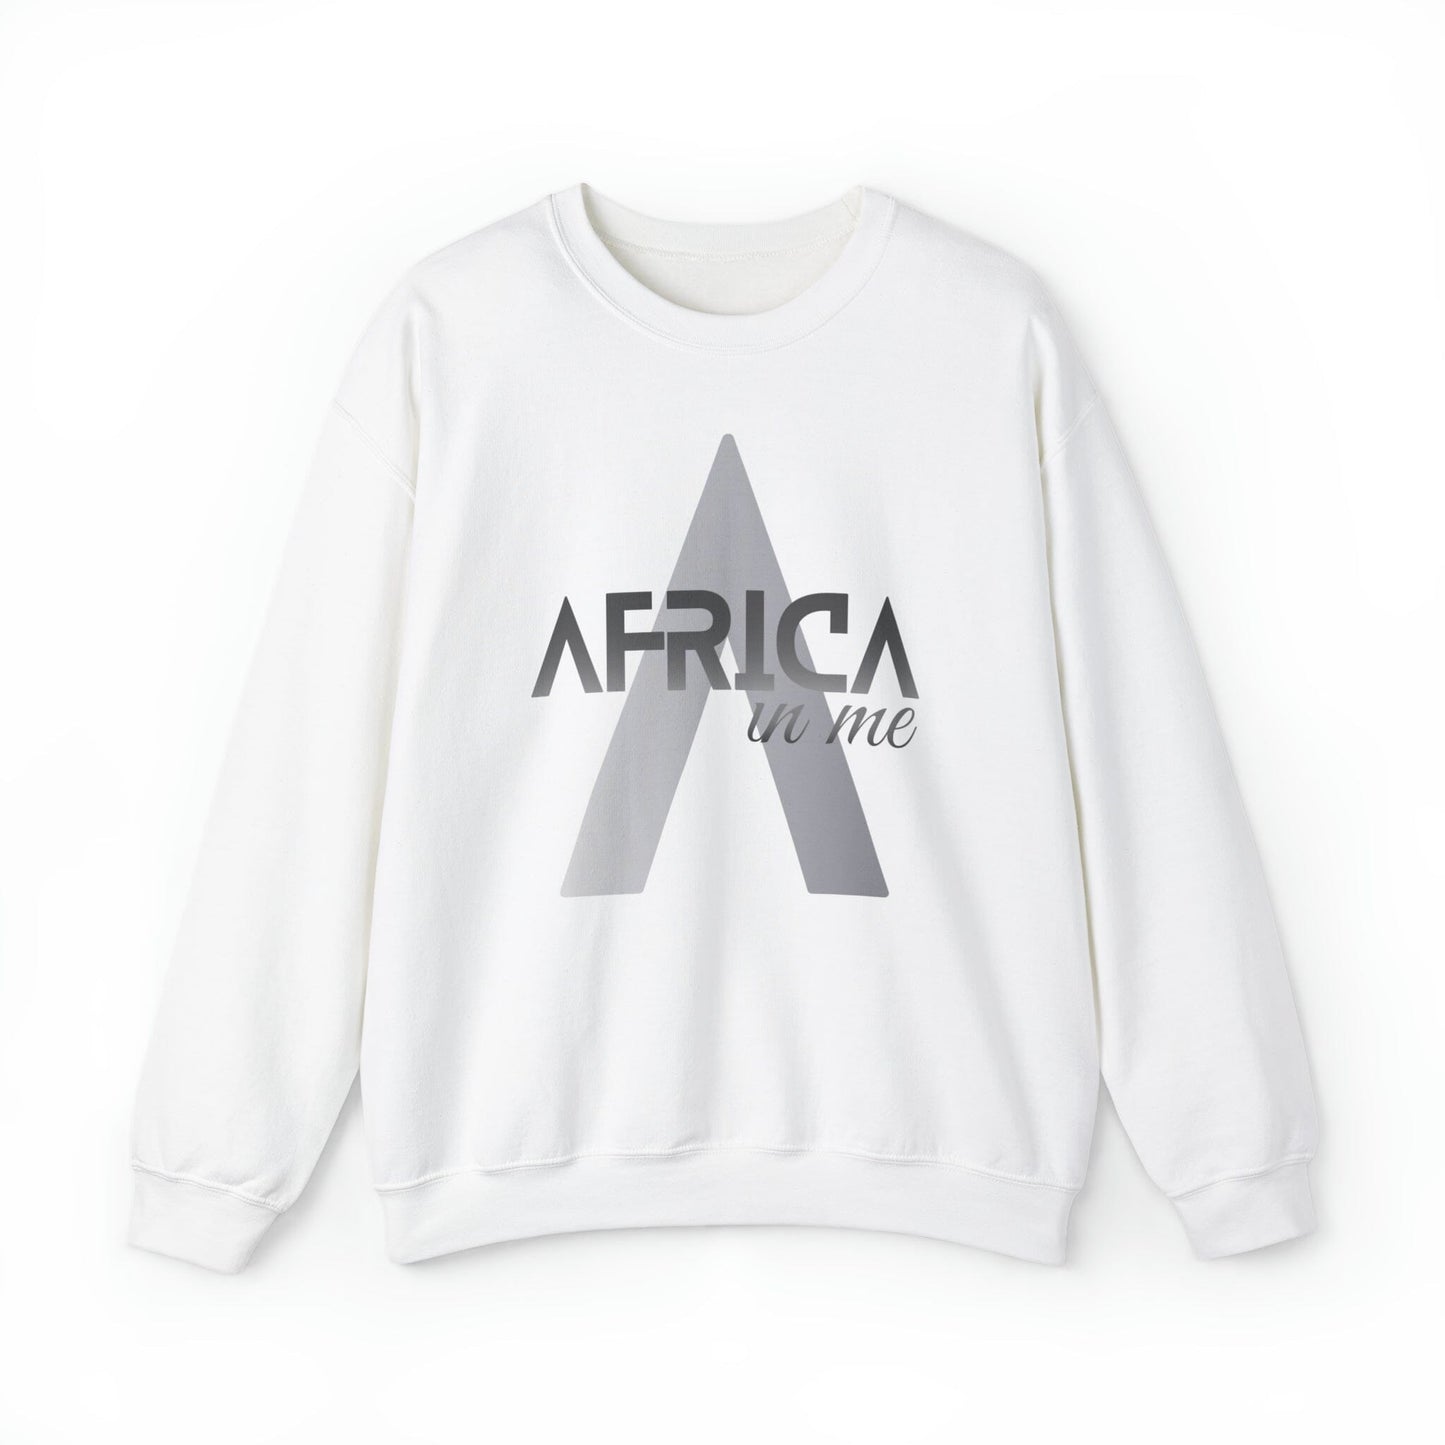 Black History Sweatshirts Superhero Africa in Me Sweatshirt S White 